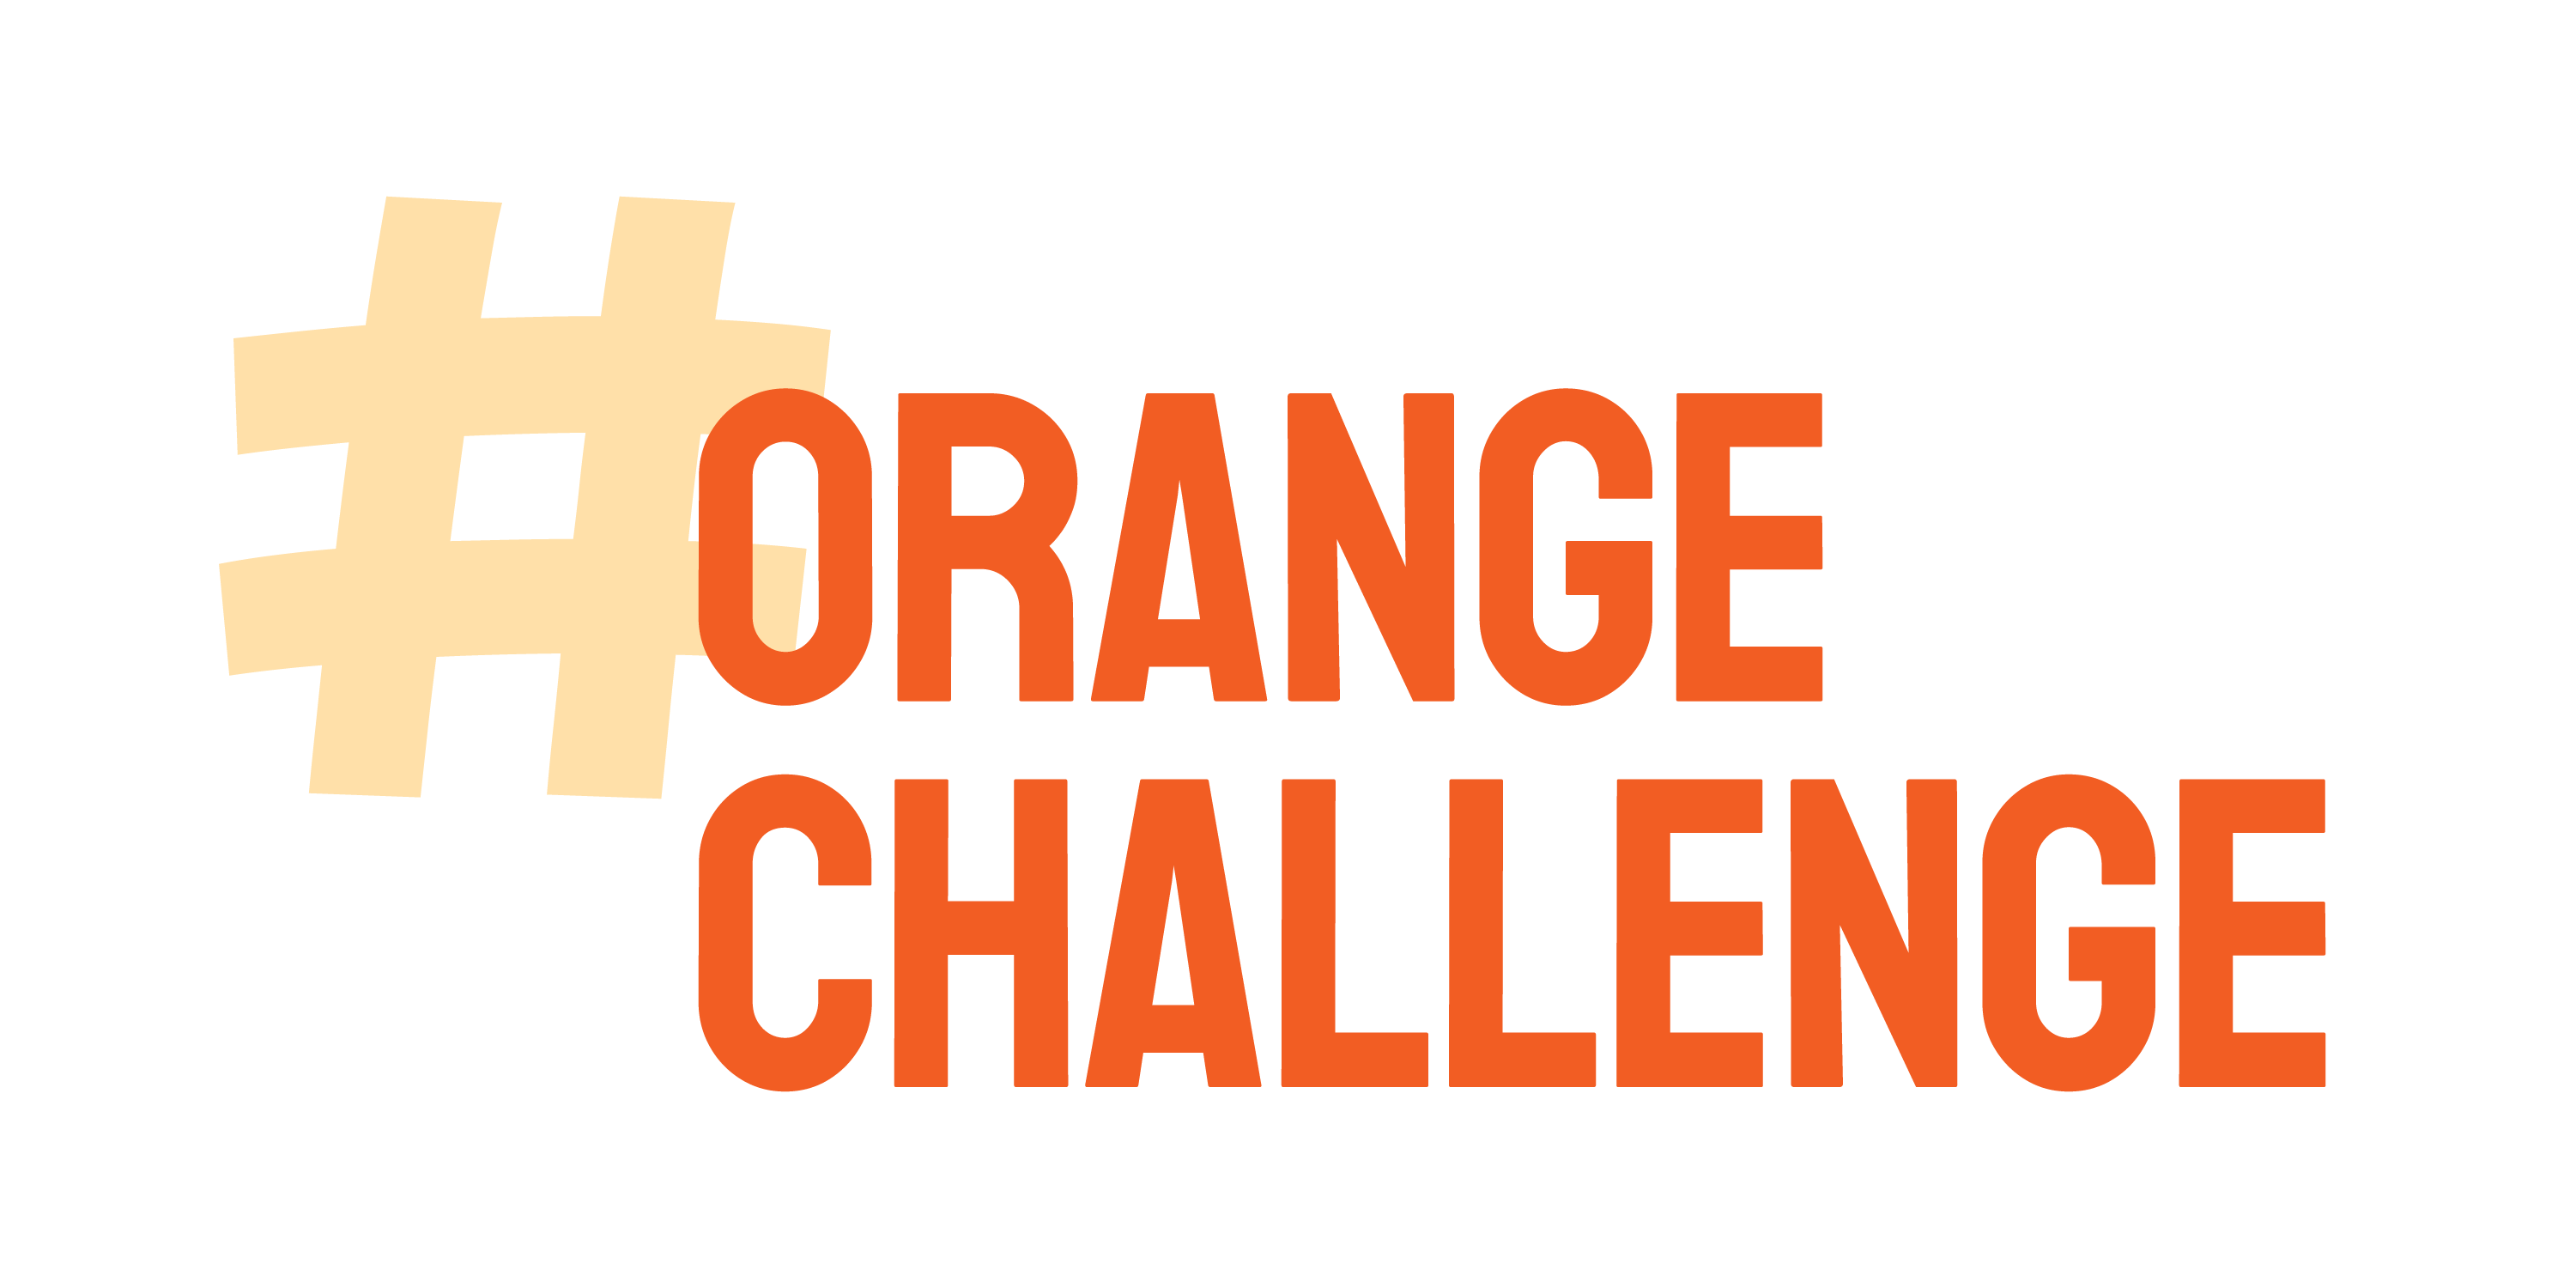 The #orangechallenge: Call for Participation